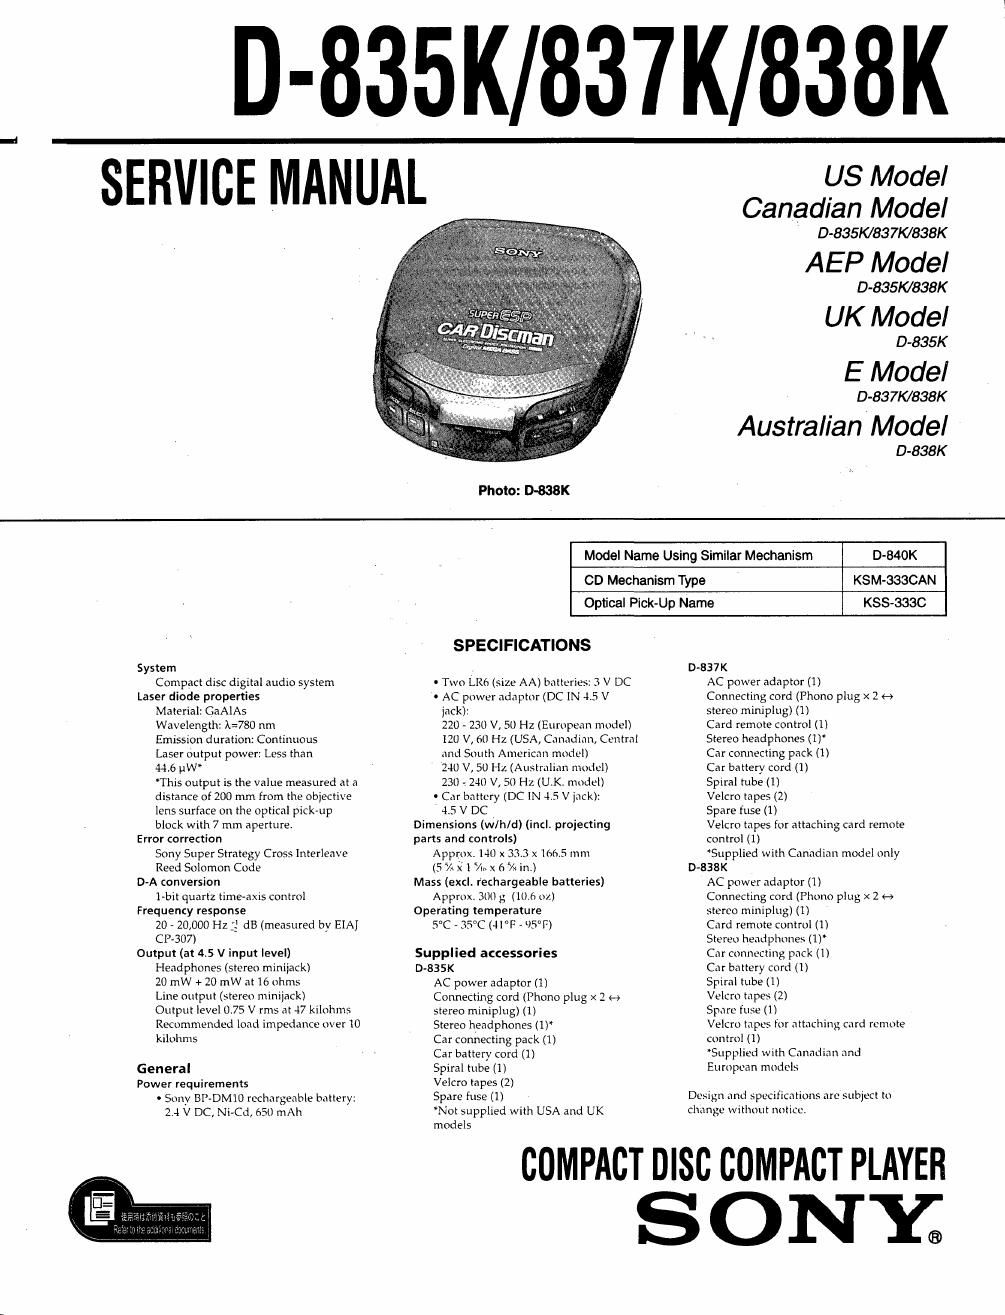 sony d 835 k service manual